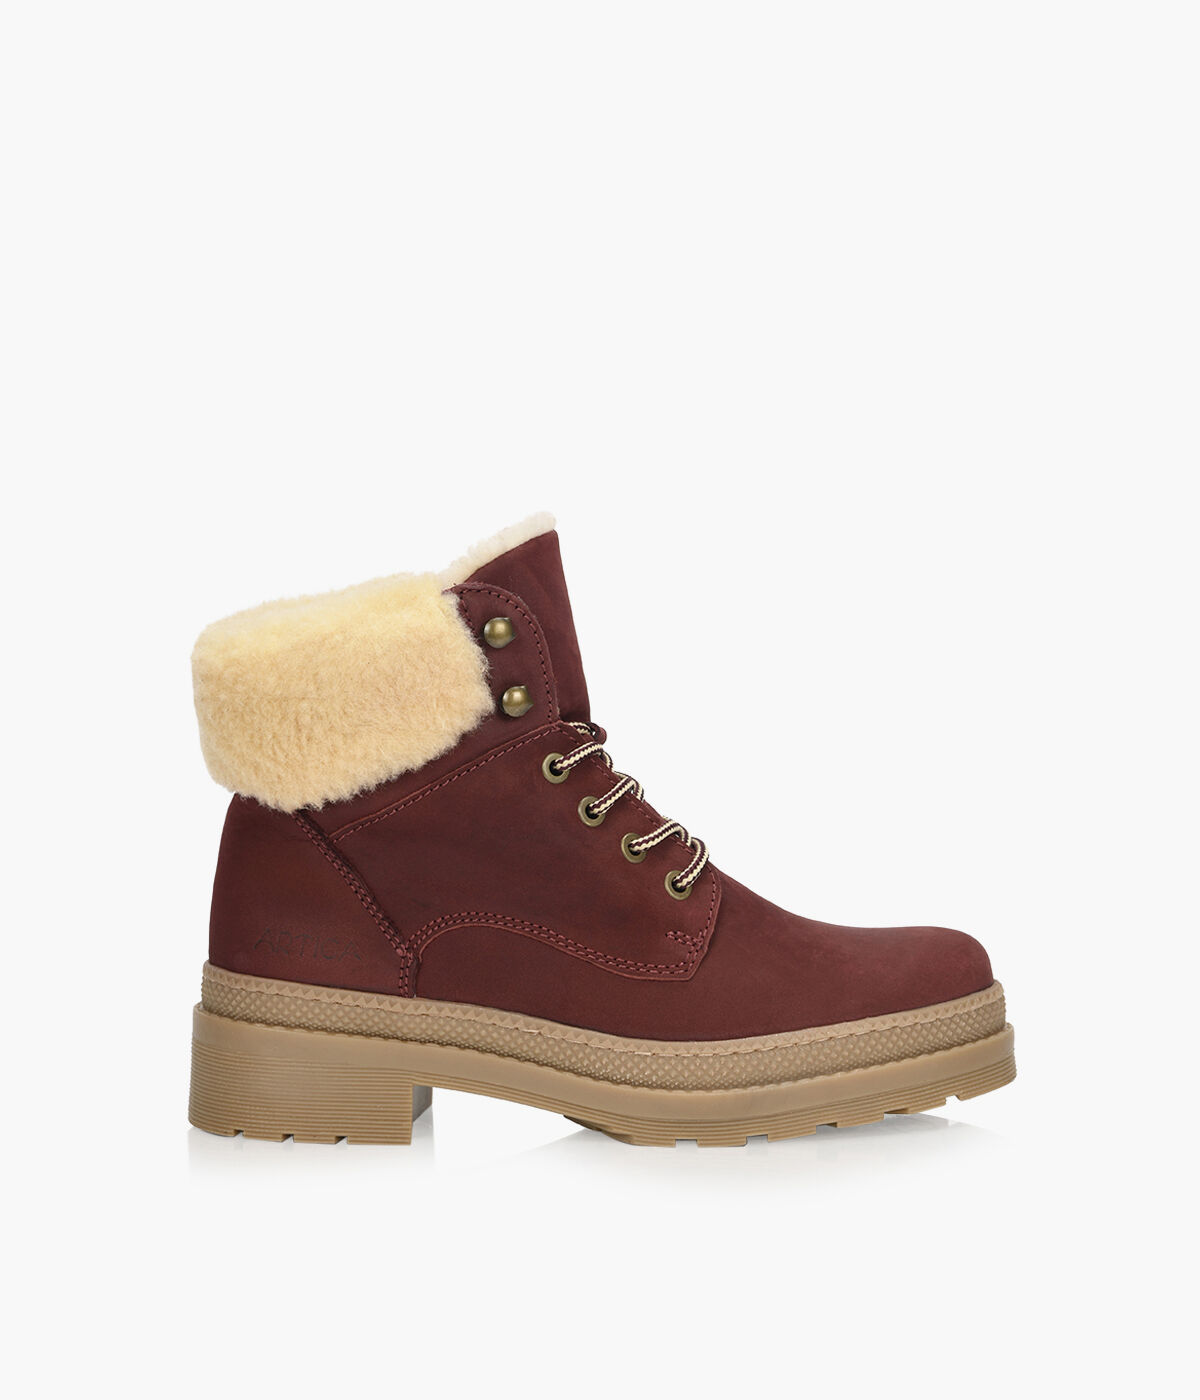 artica boots browns